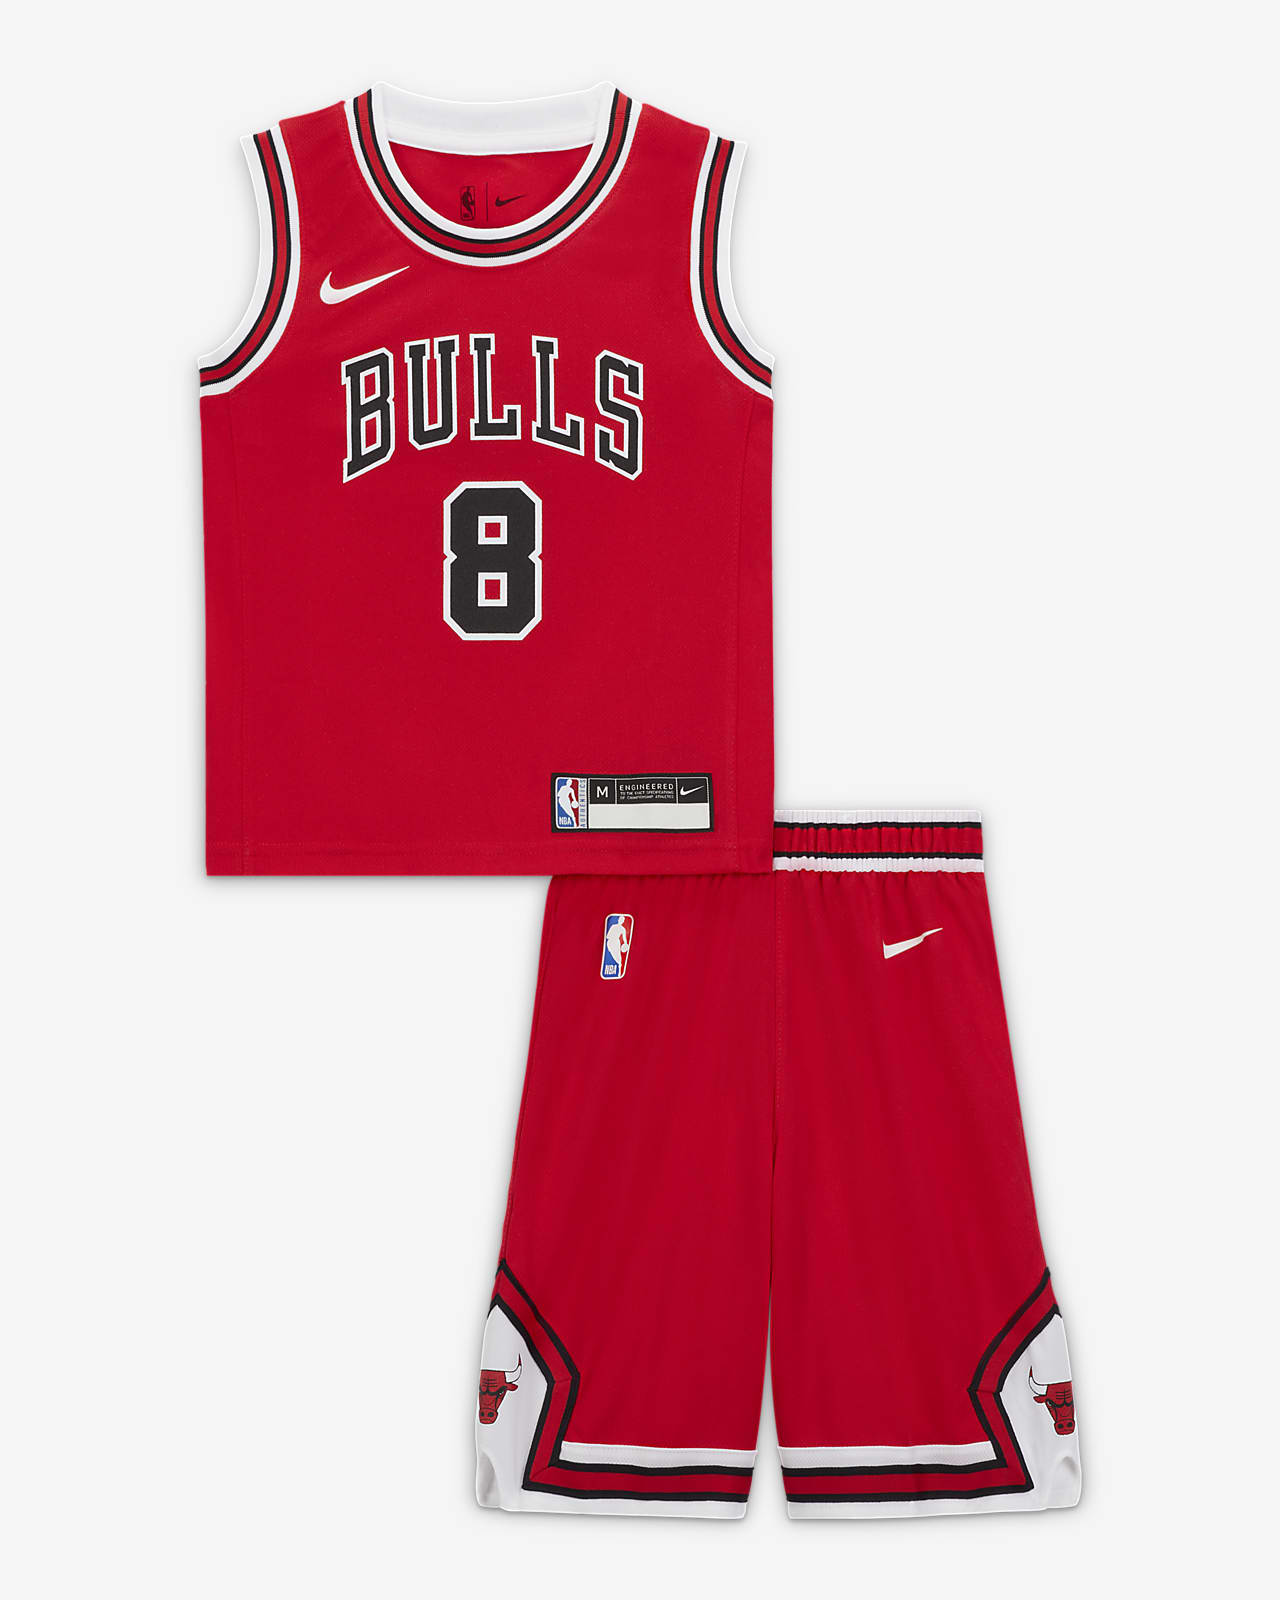 Bulls chicago Chicago Bulls: